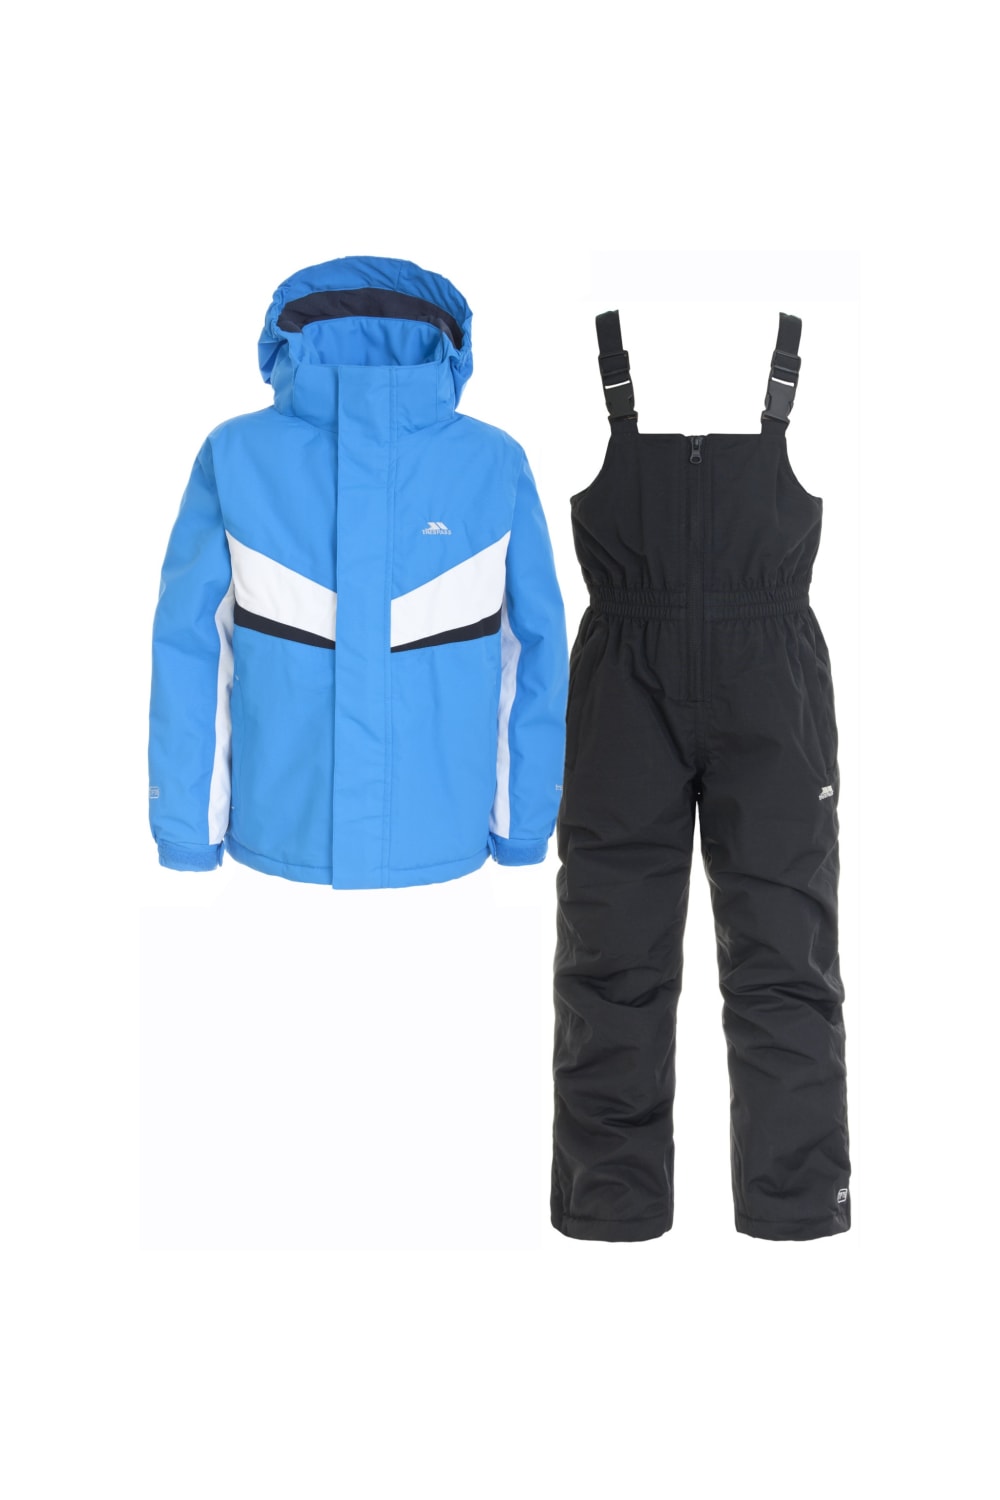 Trespass Childrens/Kids Unisex Chamonix Ski Suit (Cobalt)